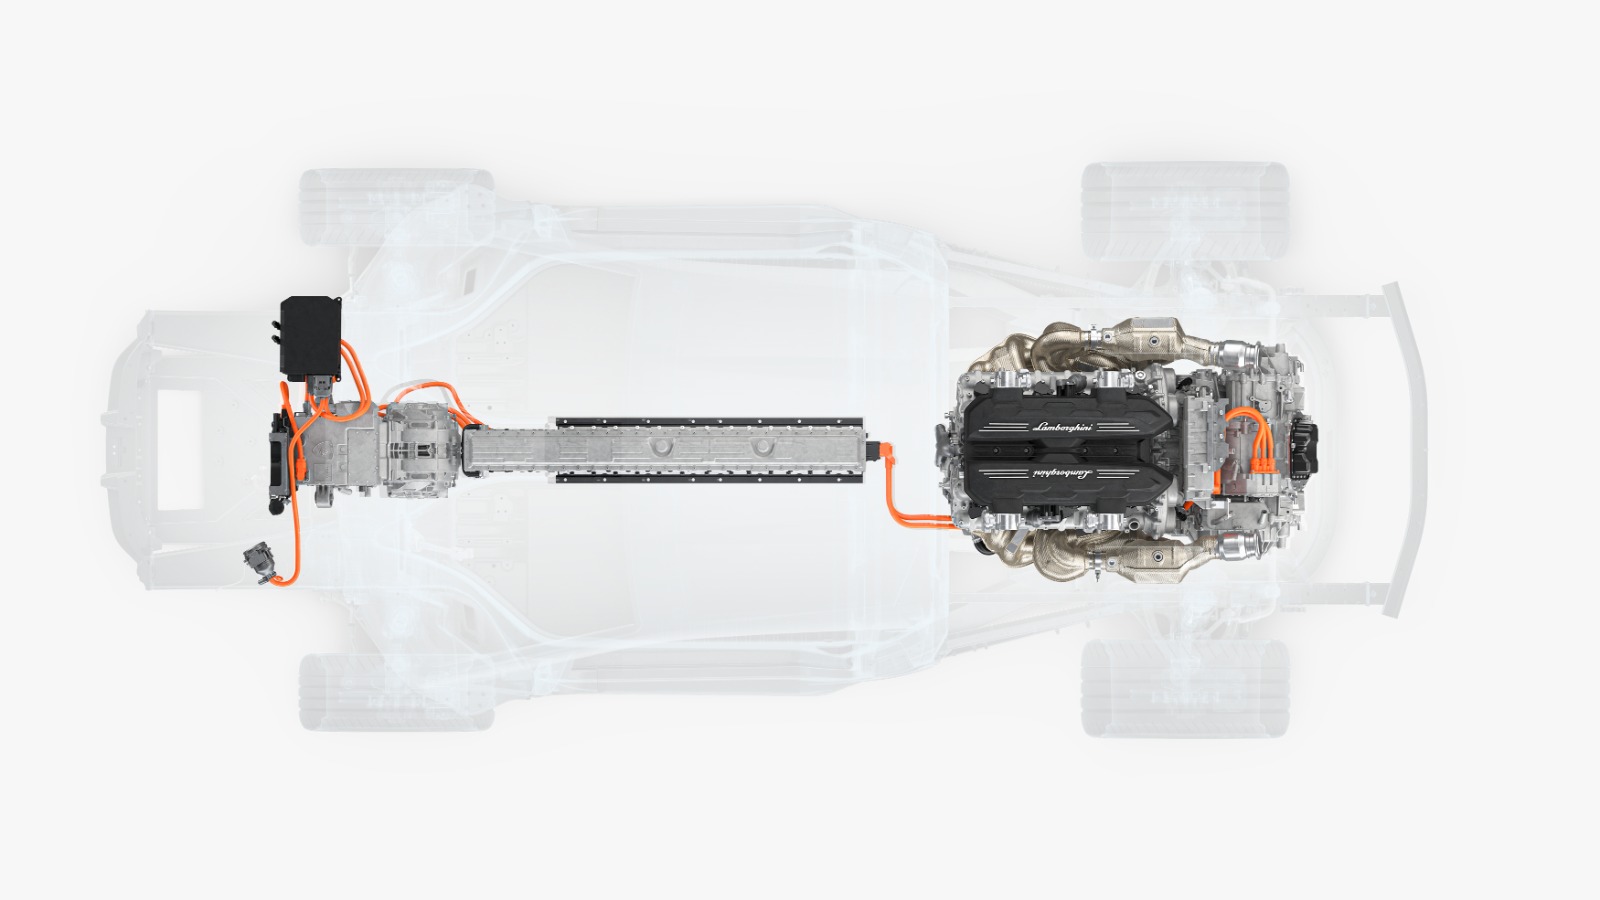 Lamborghini Aventador Replacement To Use V12 Hybrid Power — 9,500RPM Lambo V12 With Three Electric Motors!